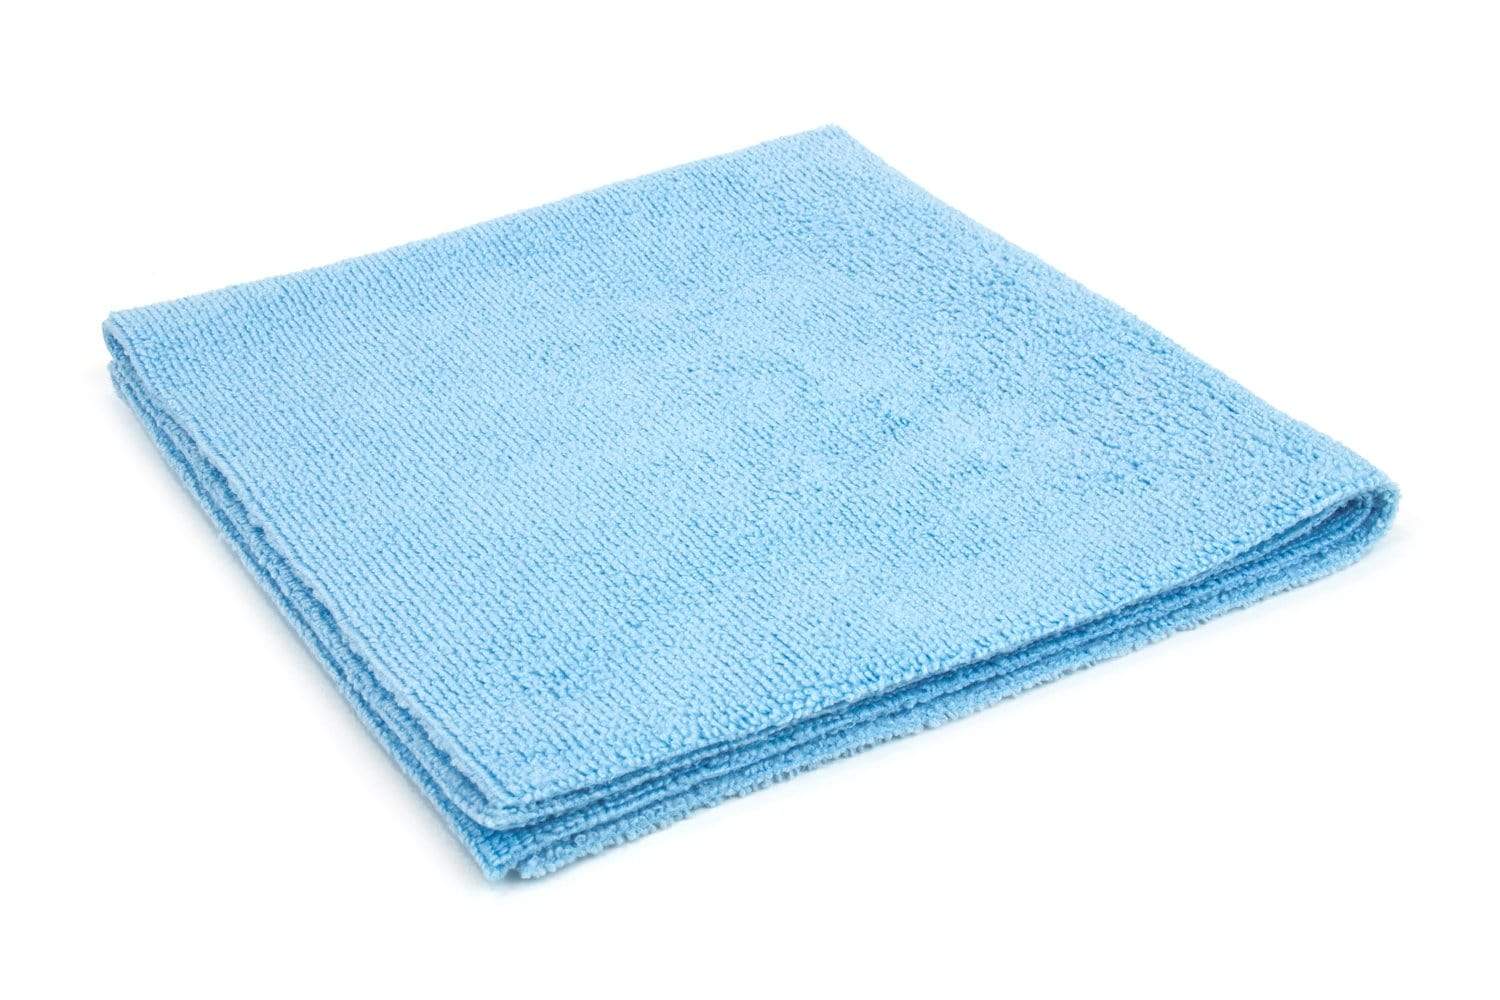 Autofiber Towels [Utility 70.30] Premium Edgeless Multi Task Detailing Towel (16 in. x 16 in., 300 gsm) - 10 pack